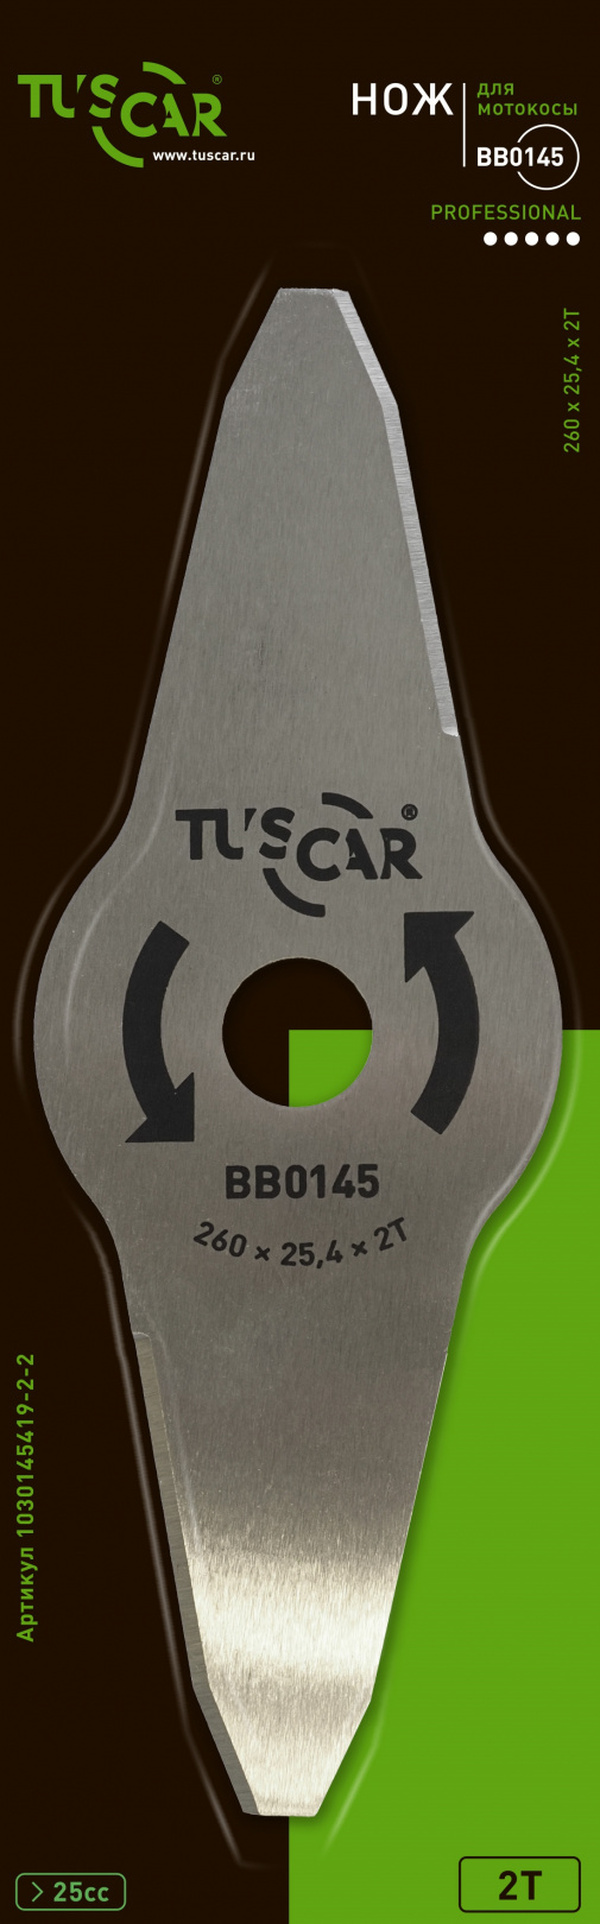 Нож для мотокосы Tuscar Professional BB0145 260x25,4x2,0x2T, Multi 1030145419-2-2